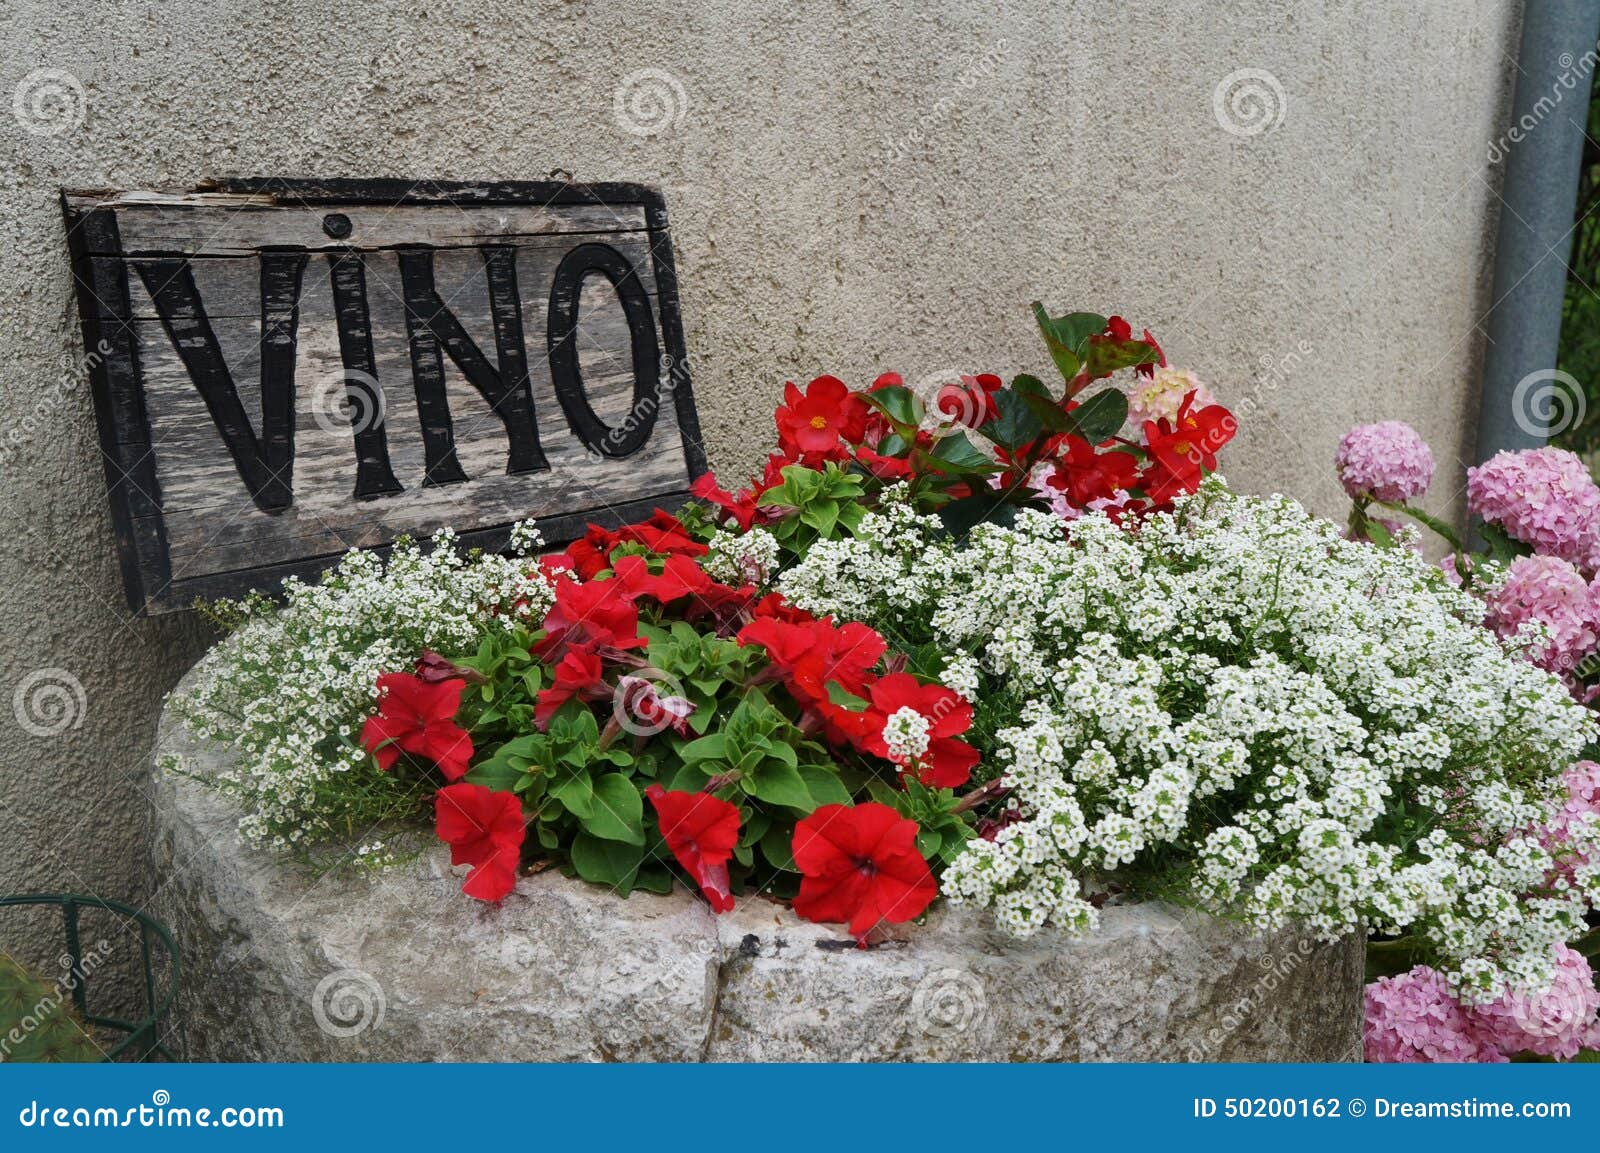 vino restaurant sign motovun, istria, croatia, europe